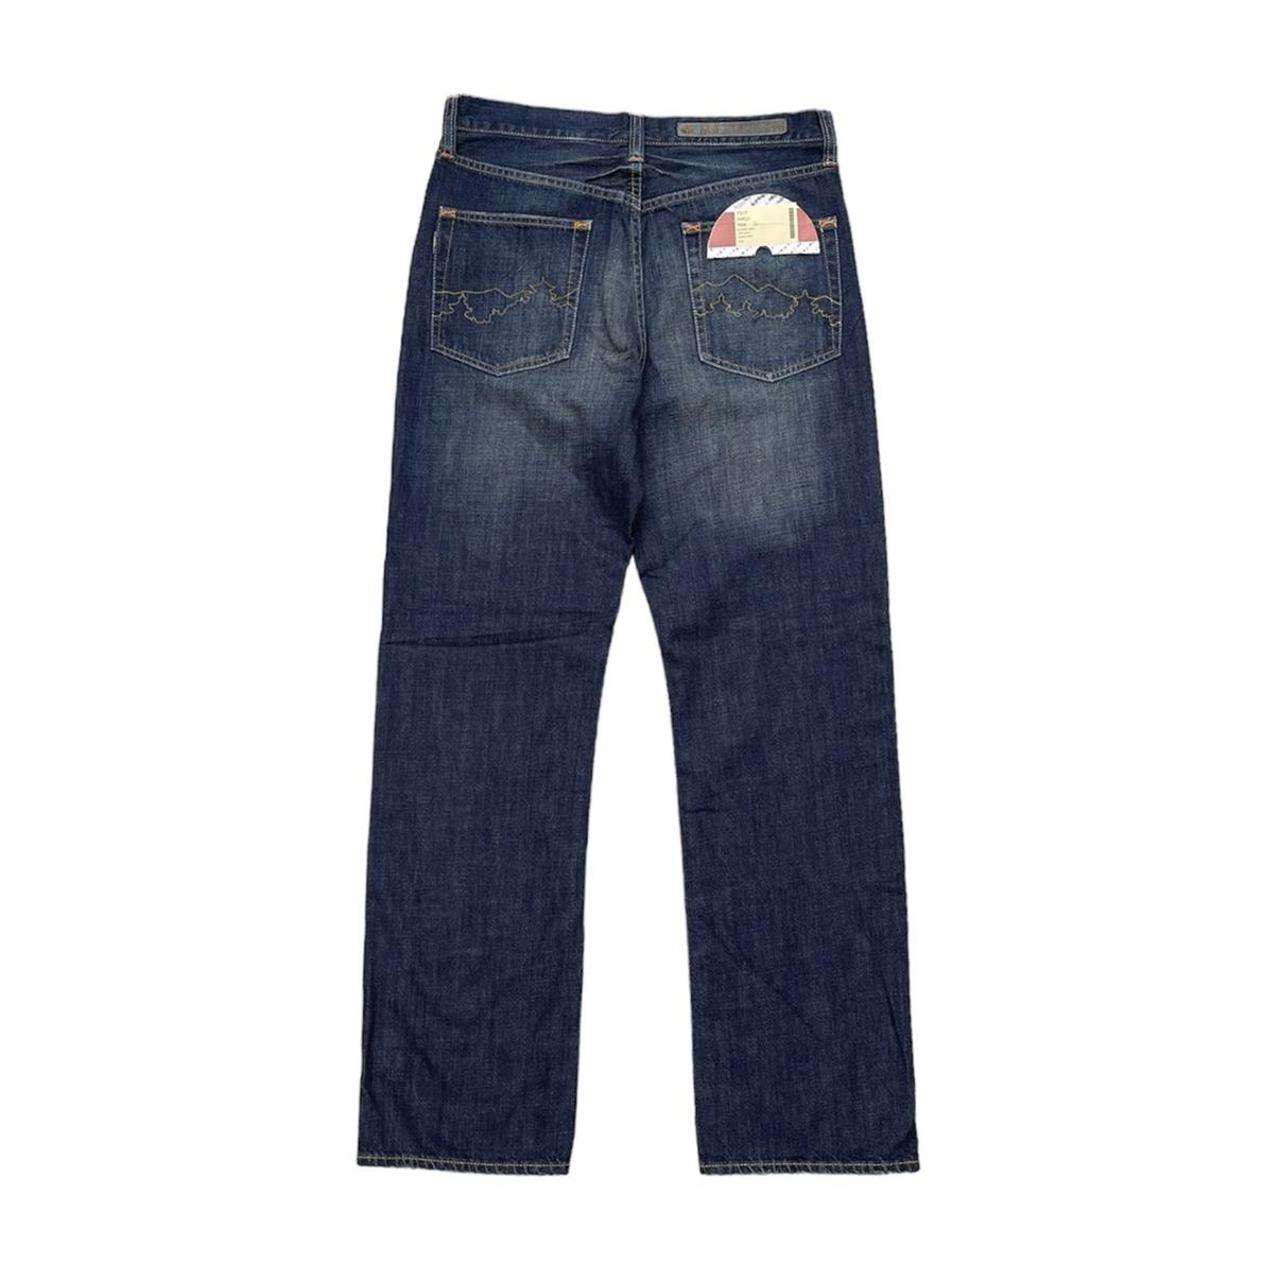 Vintage Maharishi Jeans | embroidered mountains on... - Depop